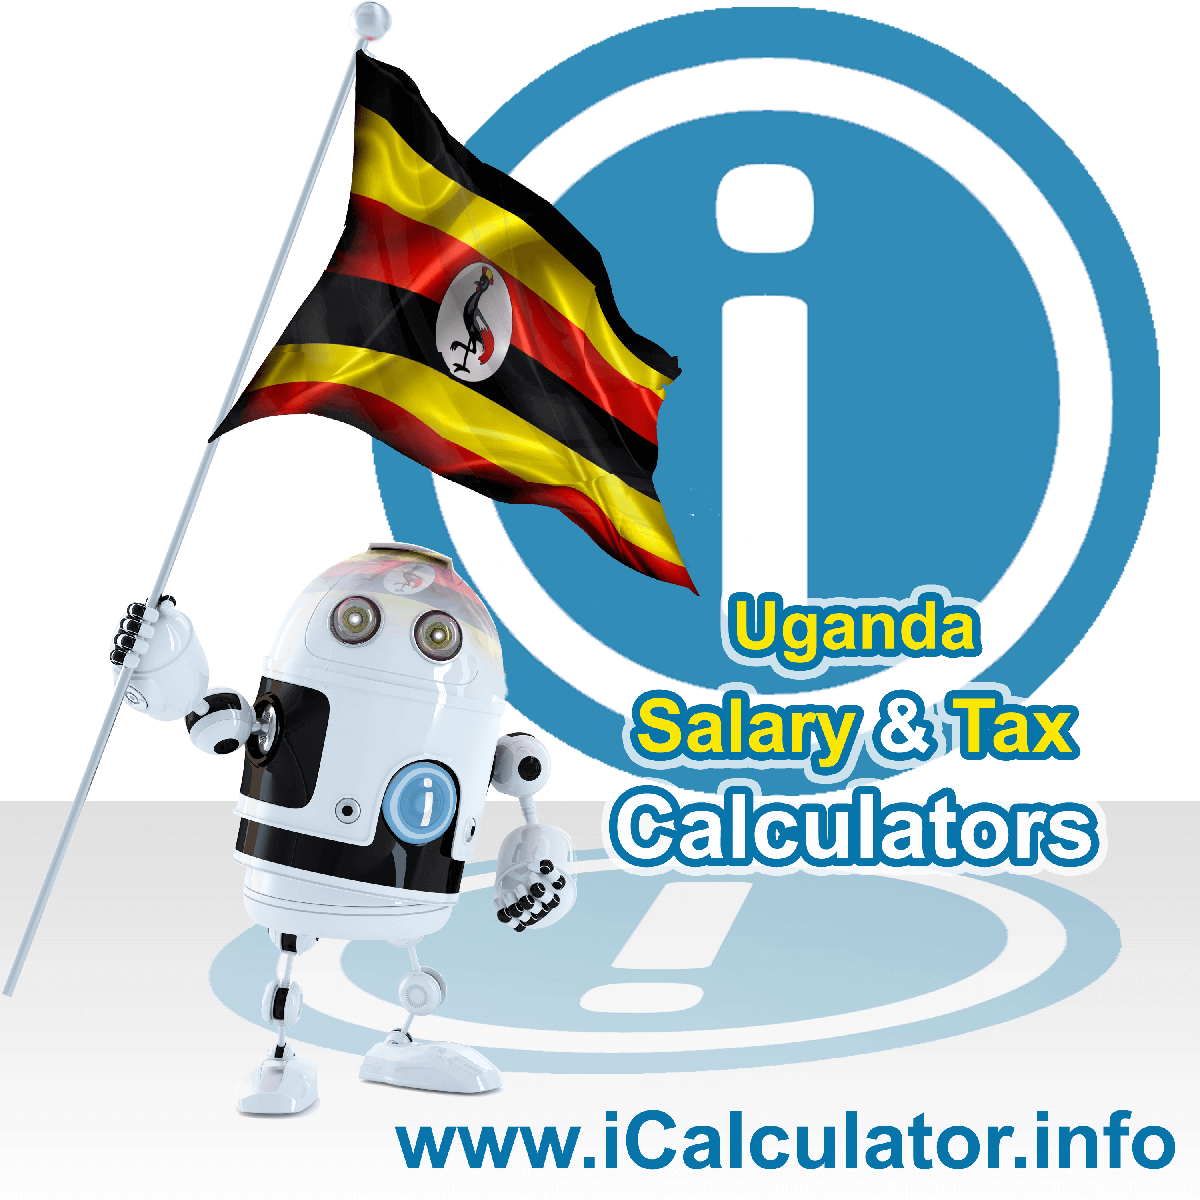 Uganda Tax Calculator. This image shows the Uganda flag and information relating to the tax formula for the Uganda Salary Calculator